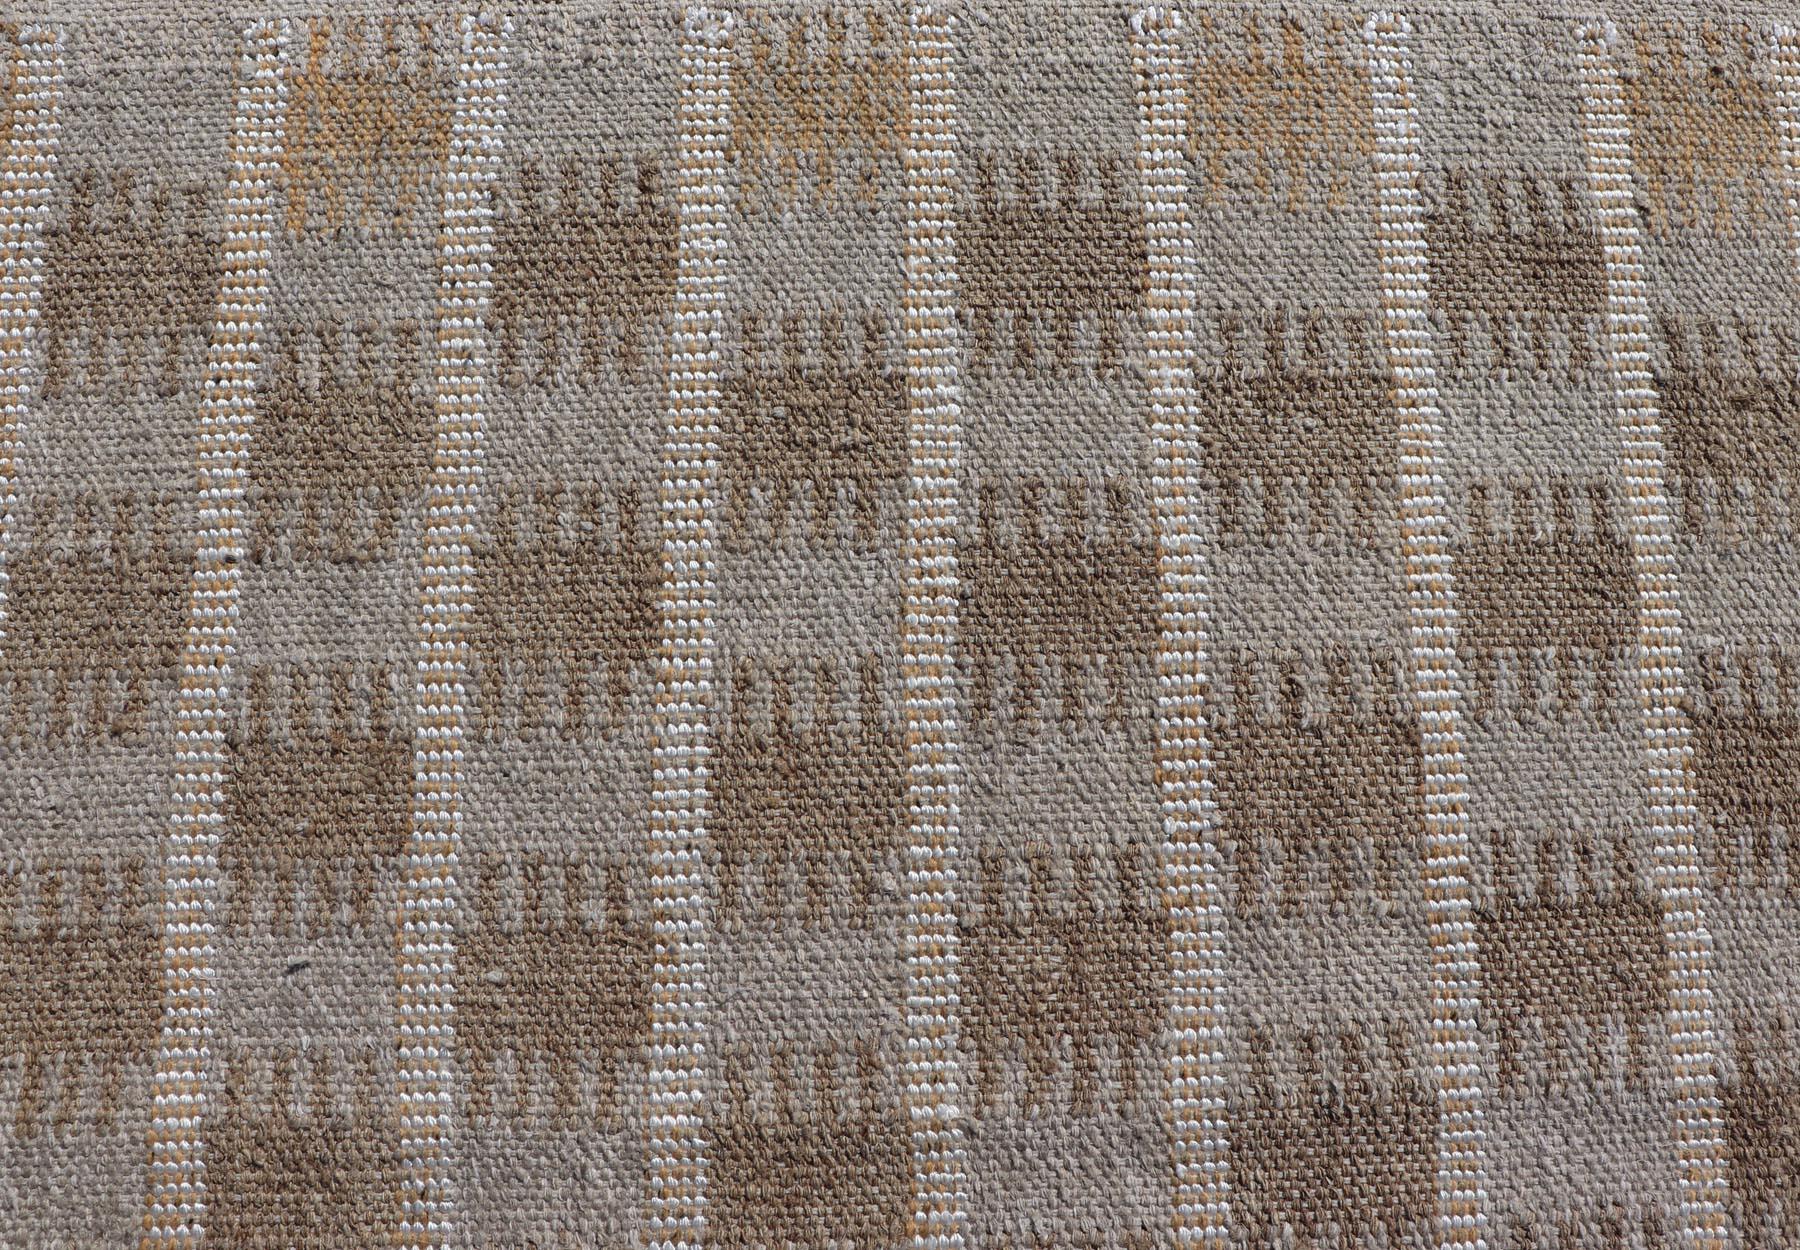 Modern Scandinavian/Swedish Flat Weave Geometric Design Rug in Taupe, warm gray, yellow, white and light brown Keivan Woven Arts rug,  RJK-24791-SHB-072-ALOE, country of origin / type: Scandinavian / Scandinavian Modern Flat Weave. This rug is made